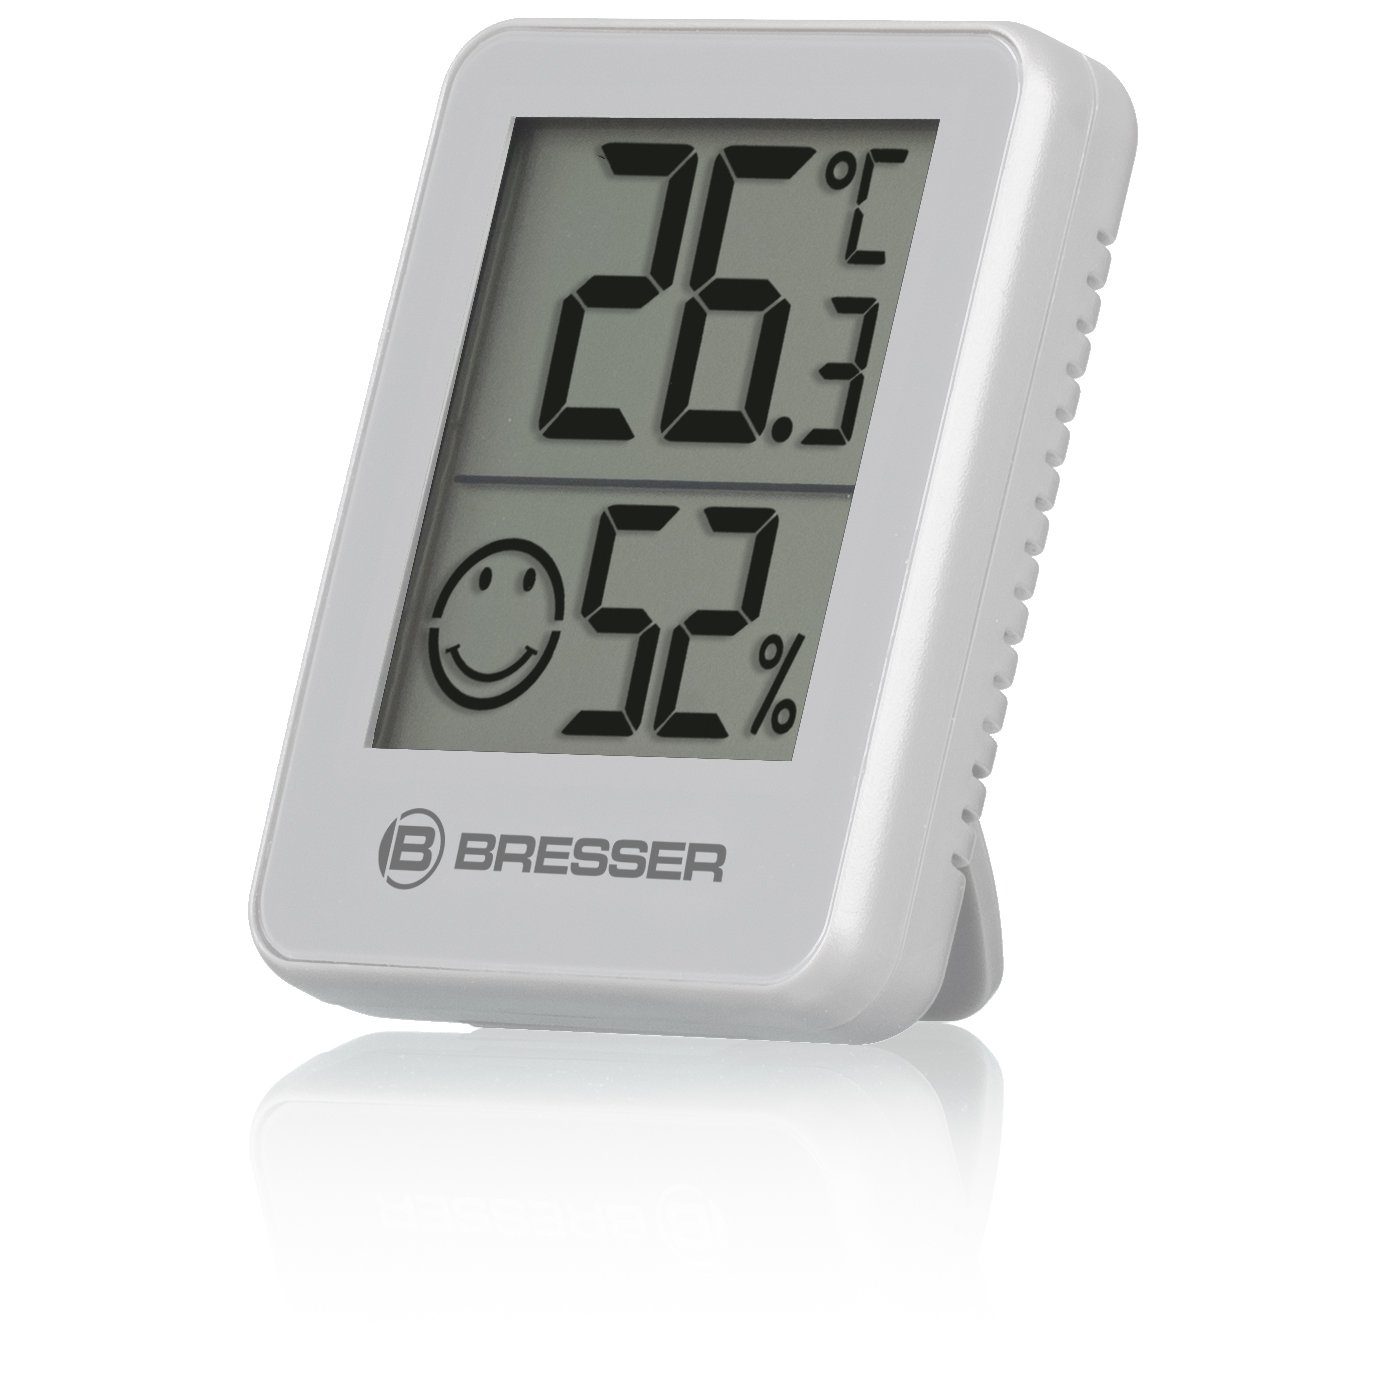 Thermometer 3er / Set Temperaturmessgerät Indikator Hygrometer weiss Temeo Hygro BRESSER